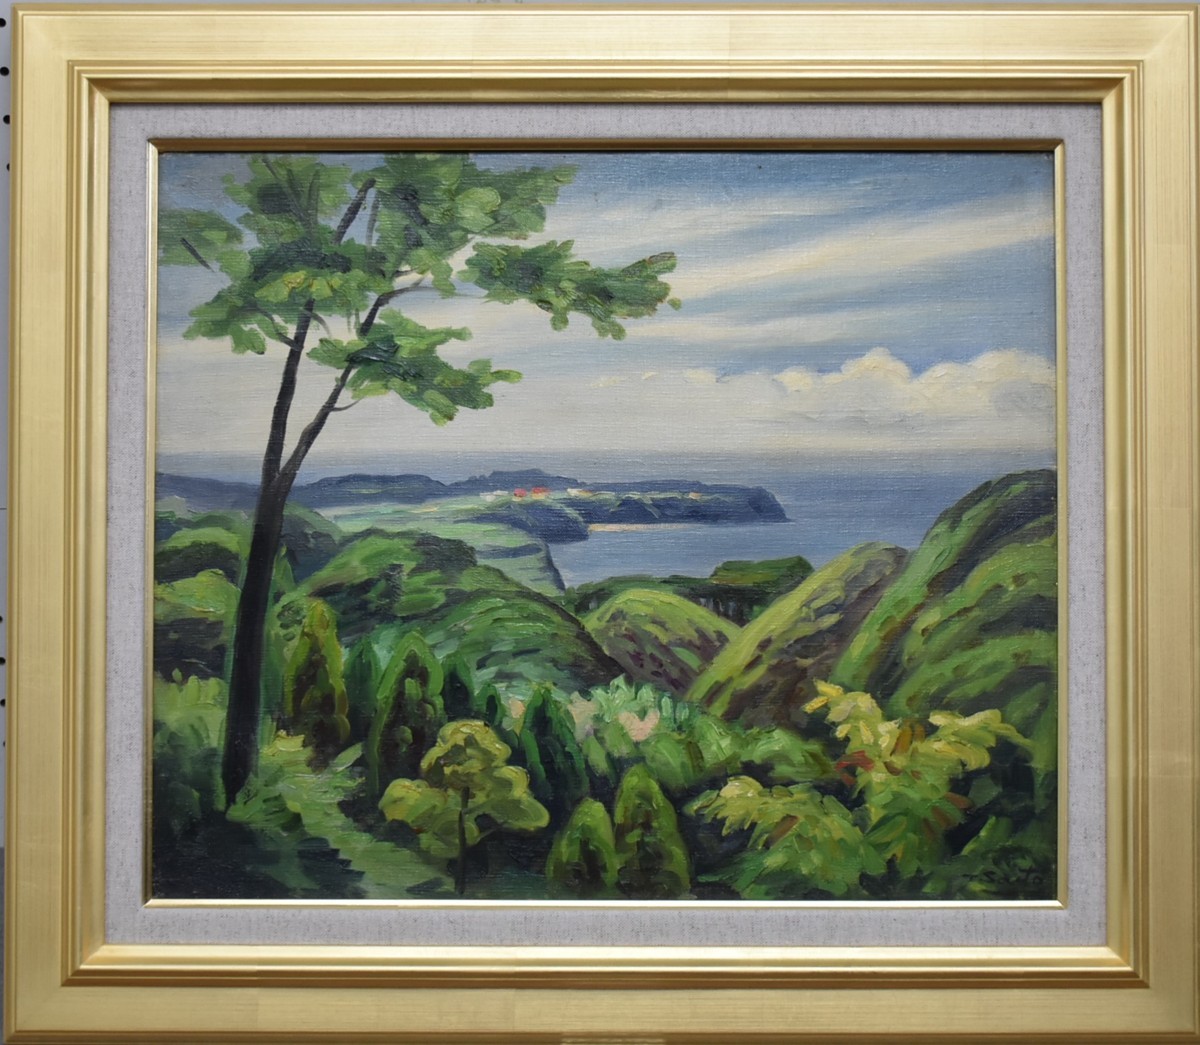 Beliebtes empfohlenes Ölgemälde! Toyonosuke Saito Nr. 8 Miura Peninsula Masamitsu Gallery, Malerei, Ölgemälde, Natur, Landschaftsmalerei